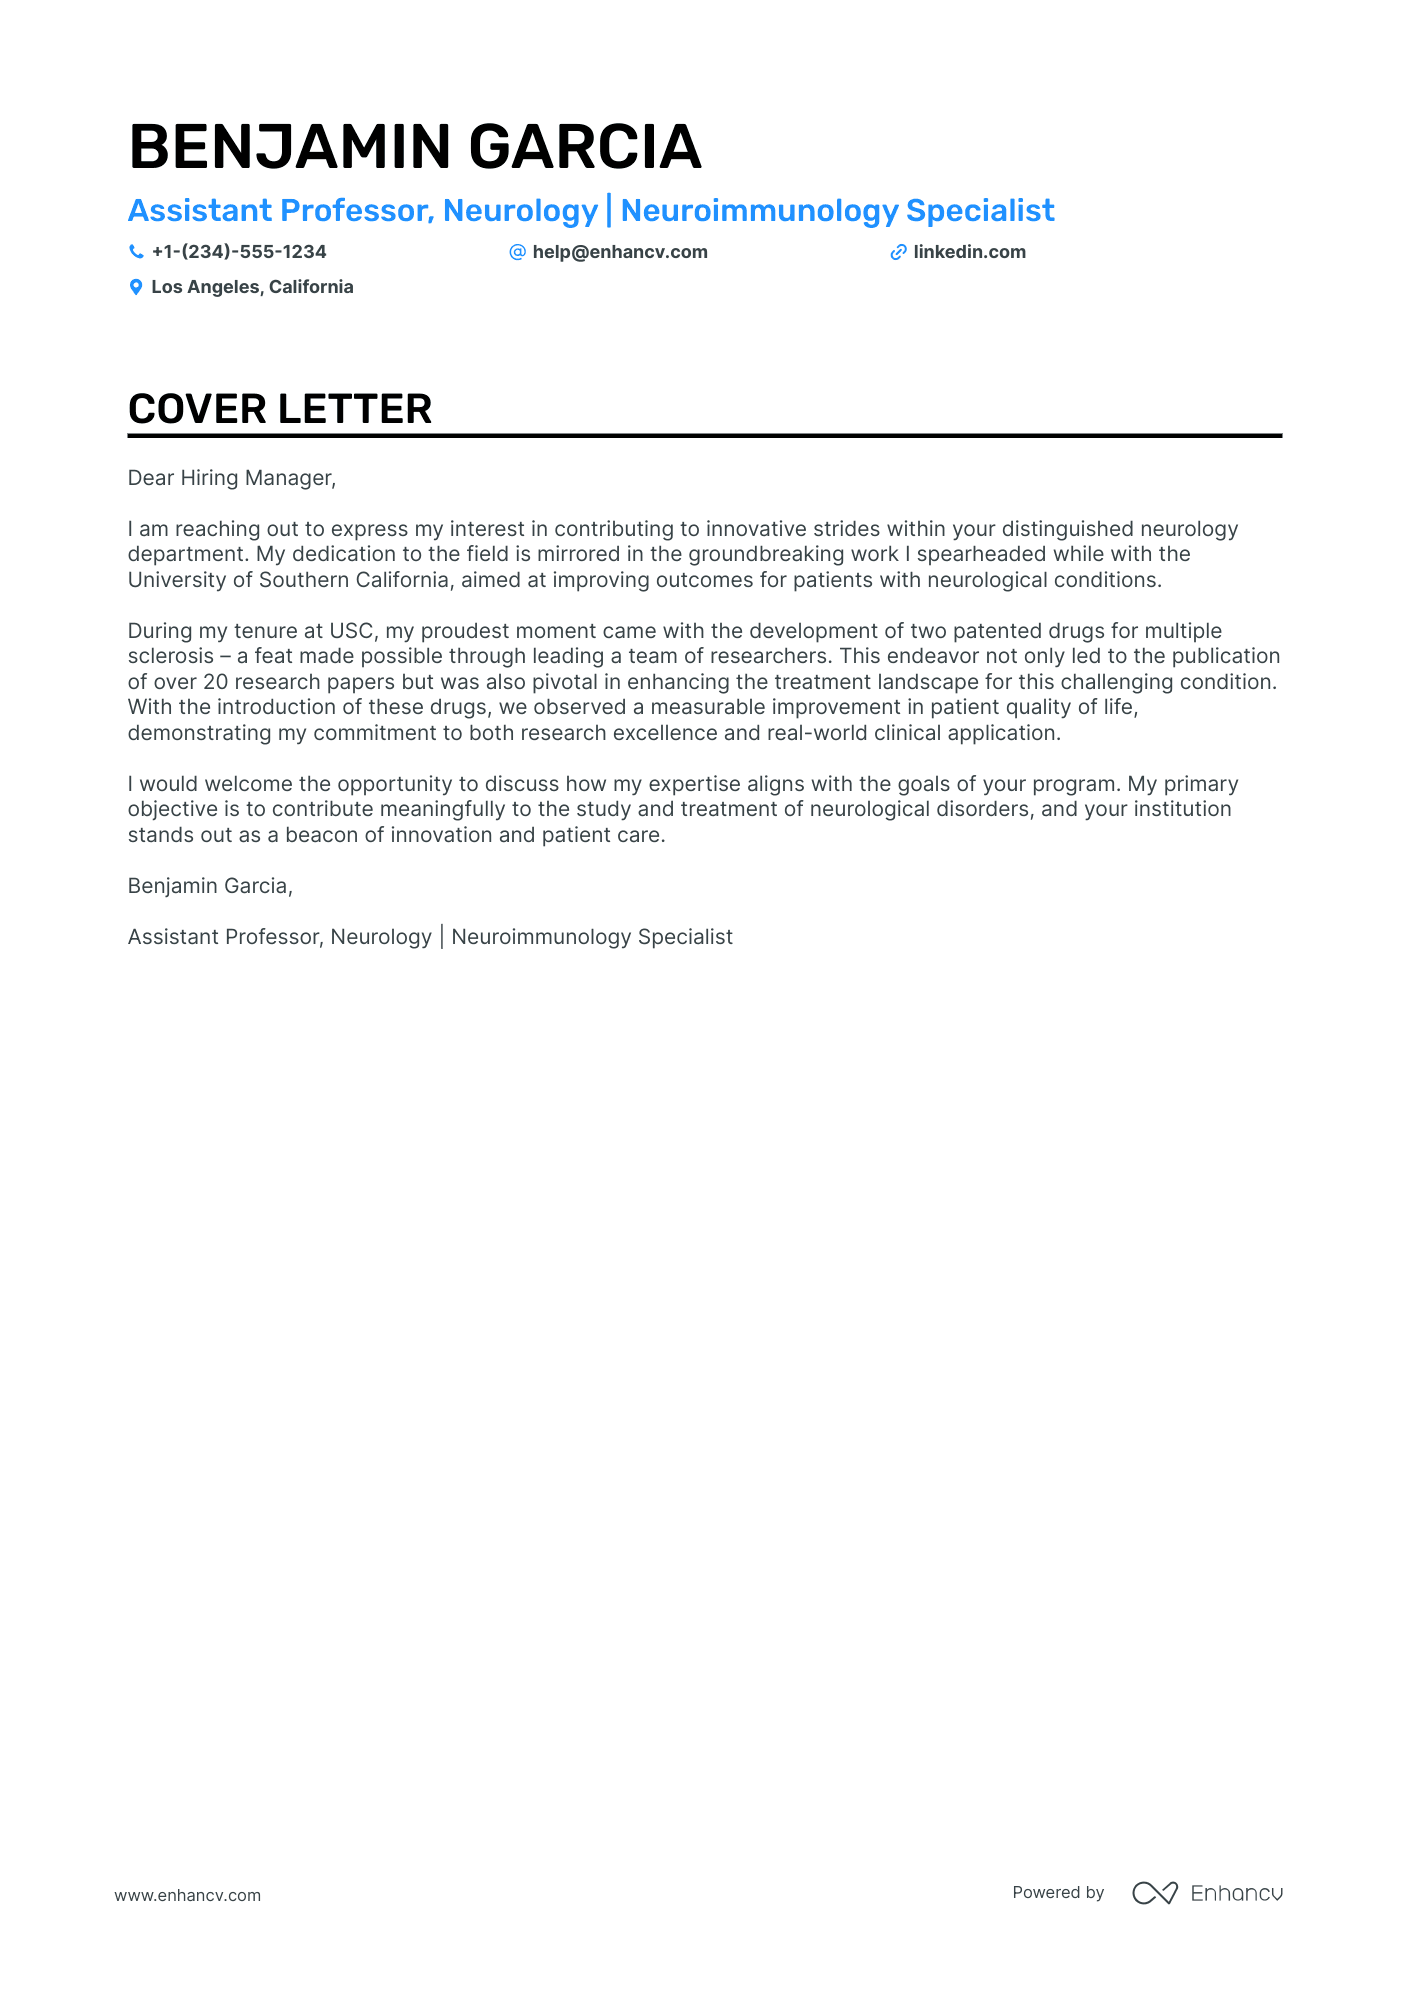 cover letter template for professor